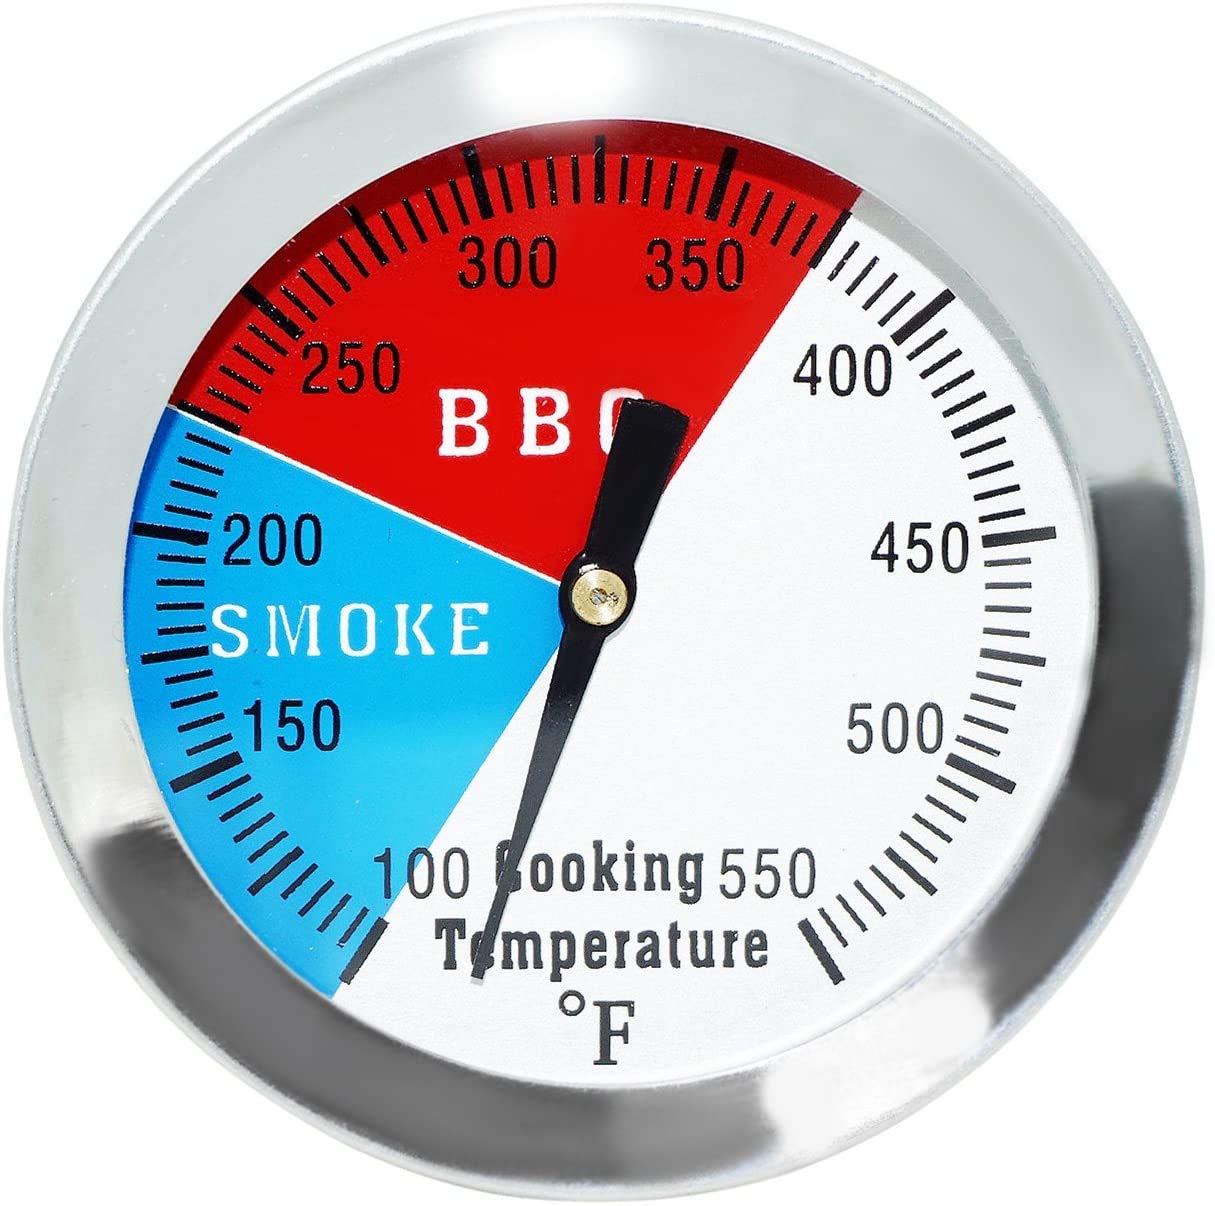 DOZYANT 2" BBQ Thermometer Gauge